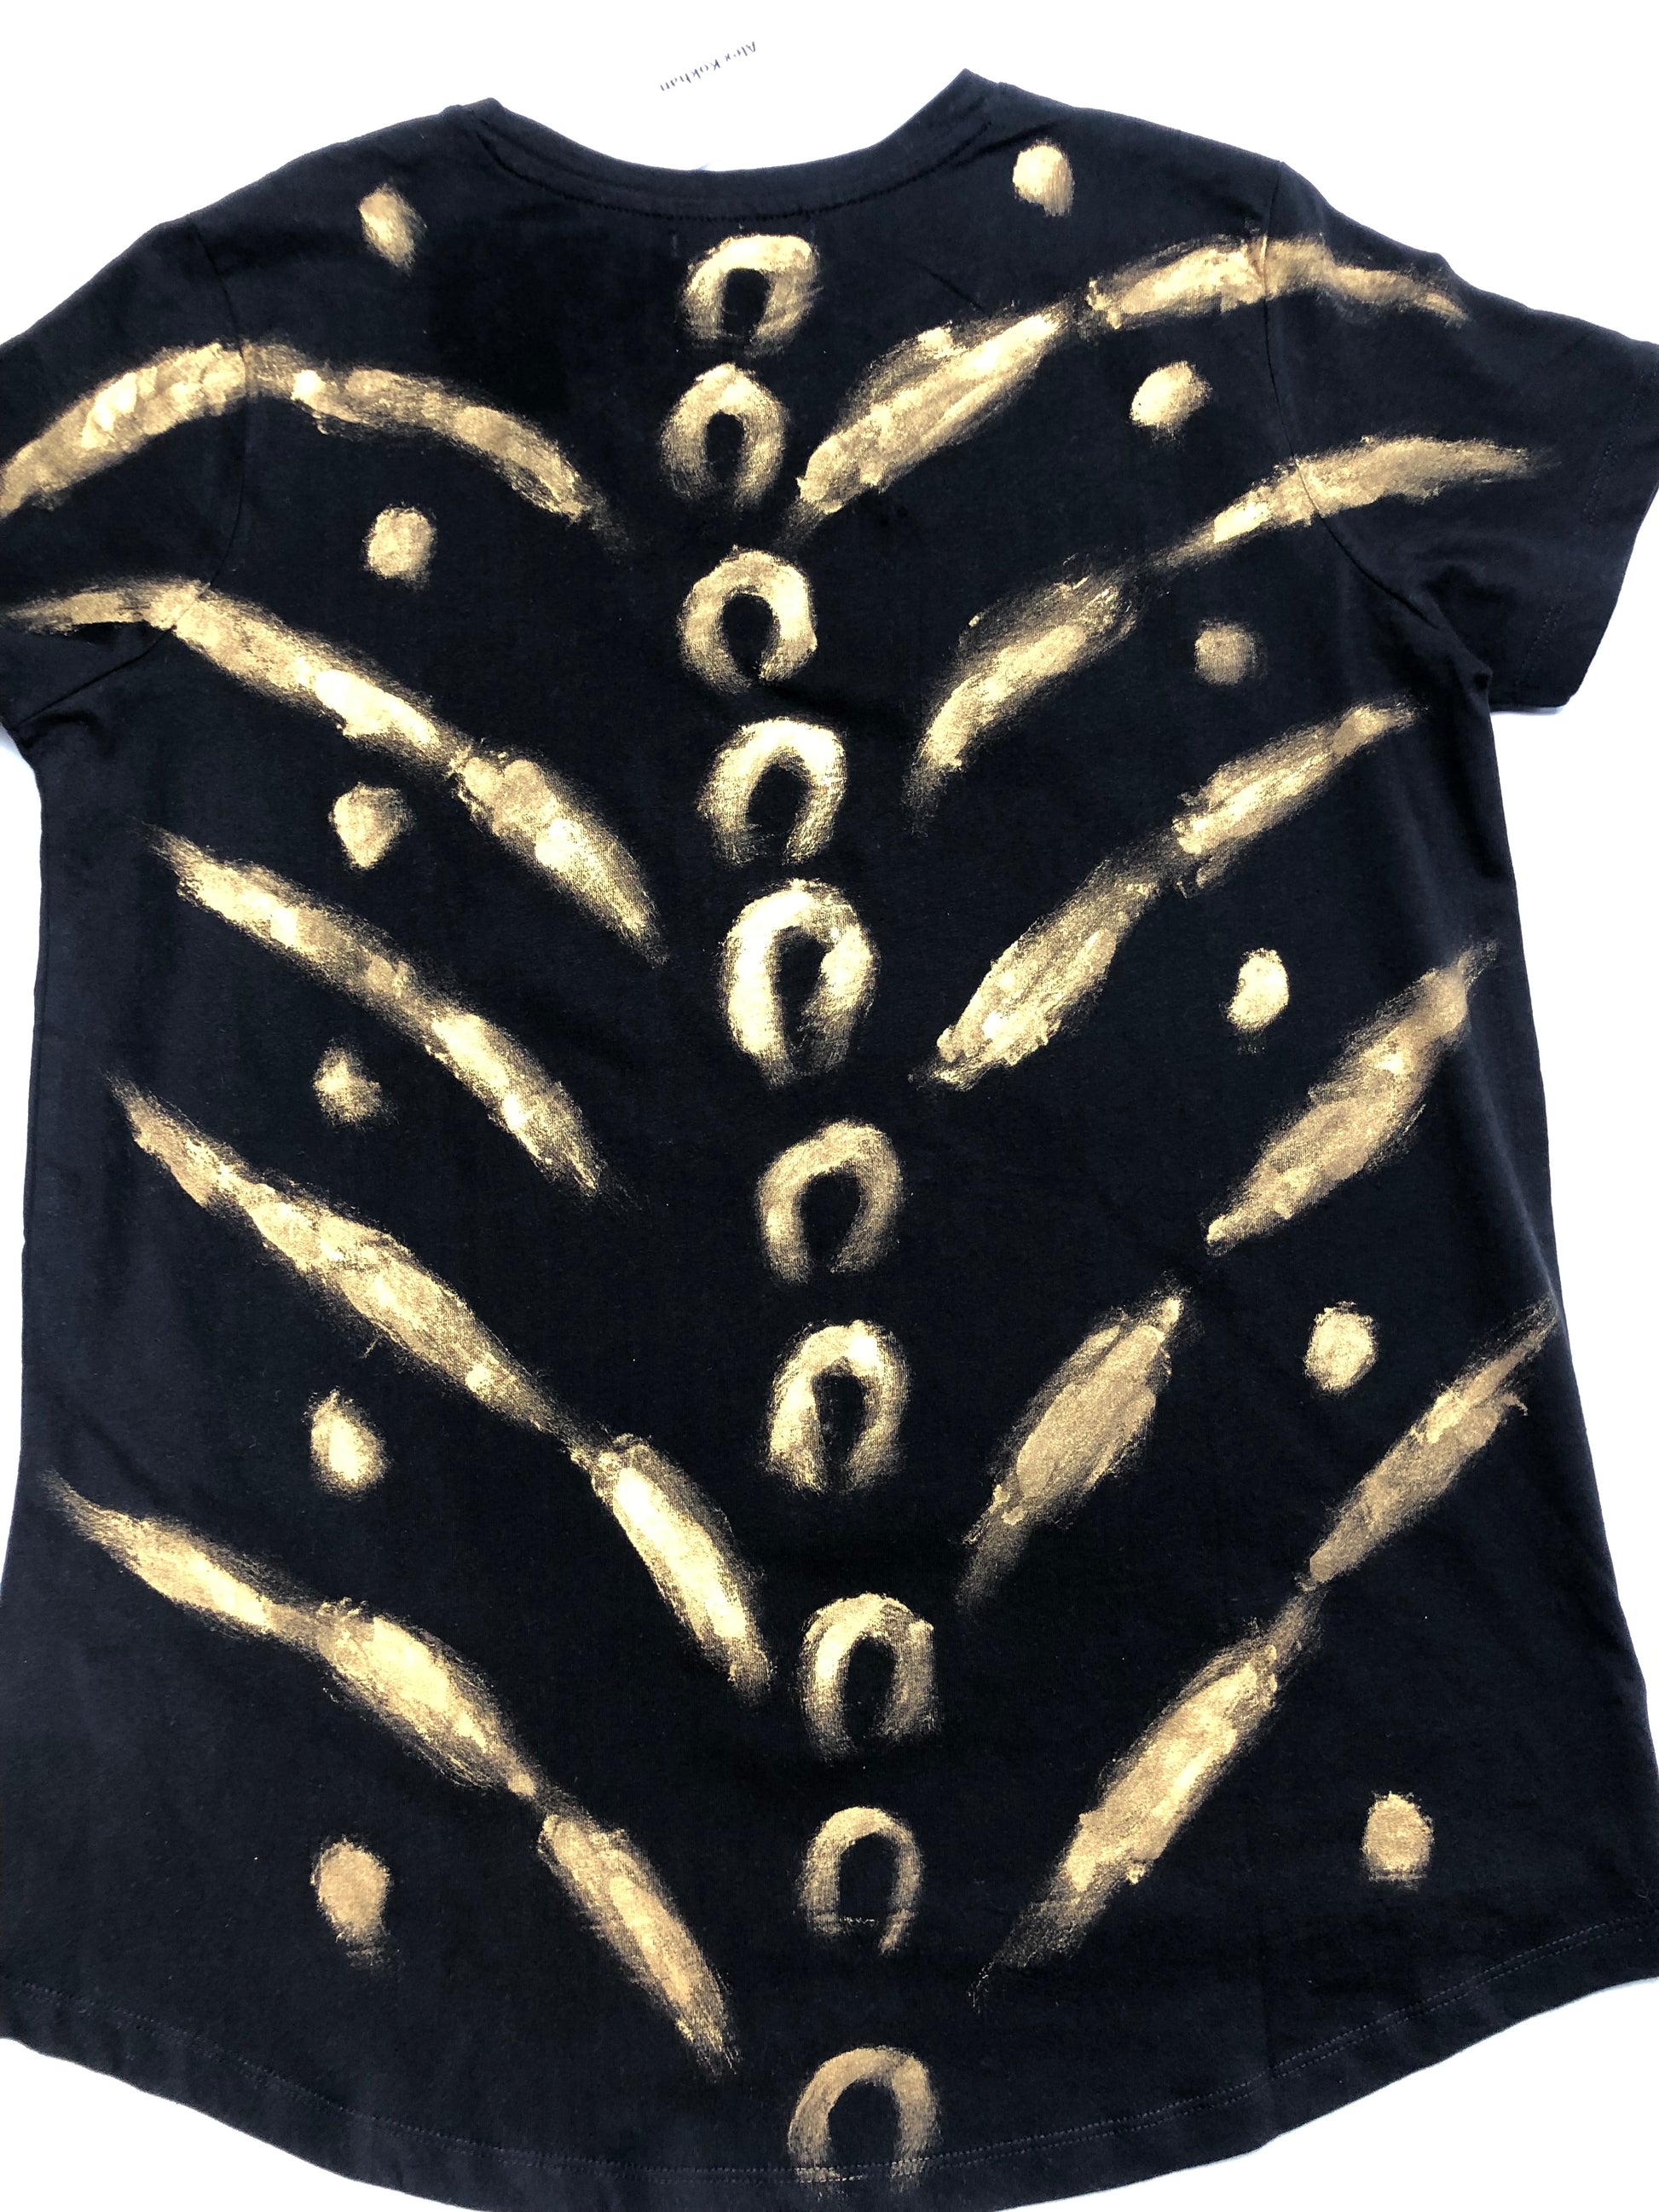 Women's fancy short sleeve t-shirt fanged tiger design details of hand painted tiger back